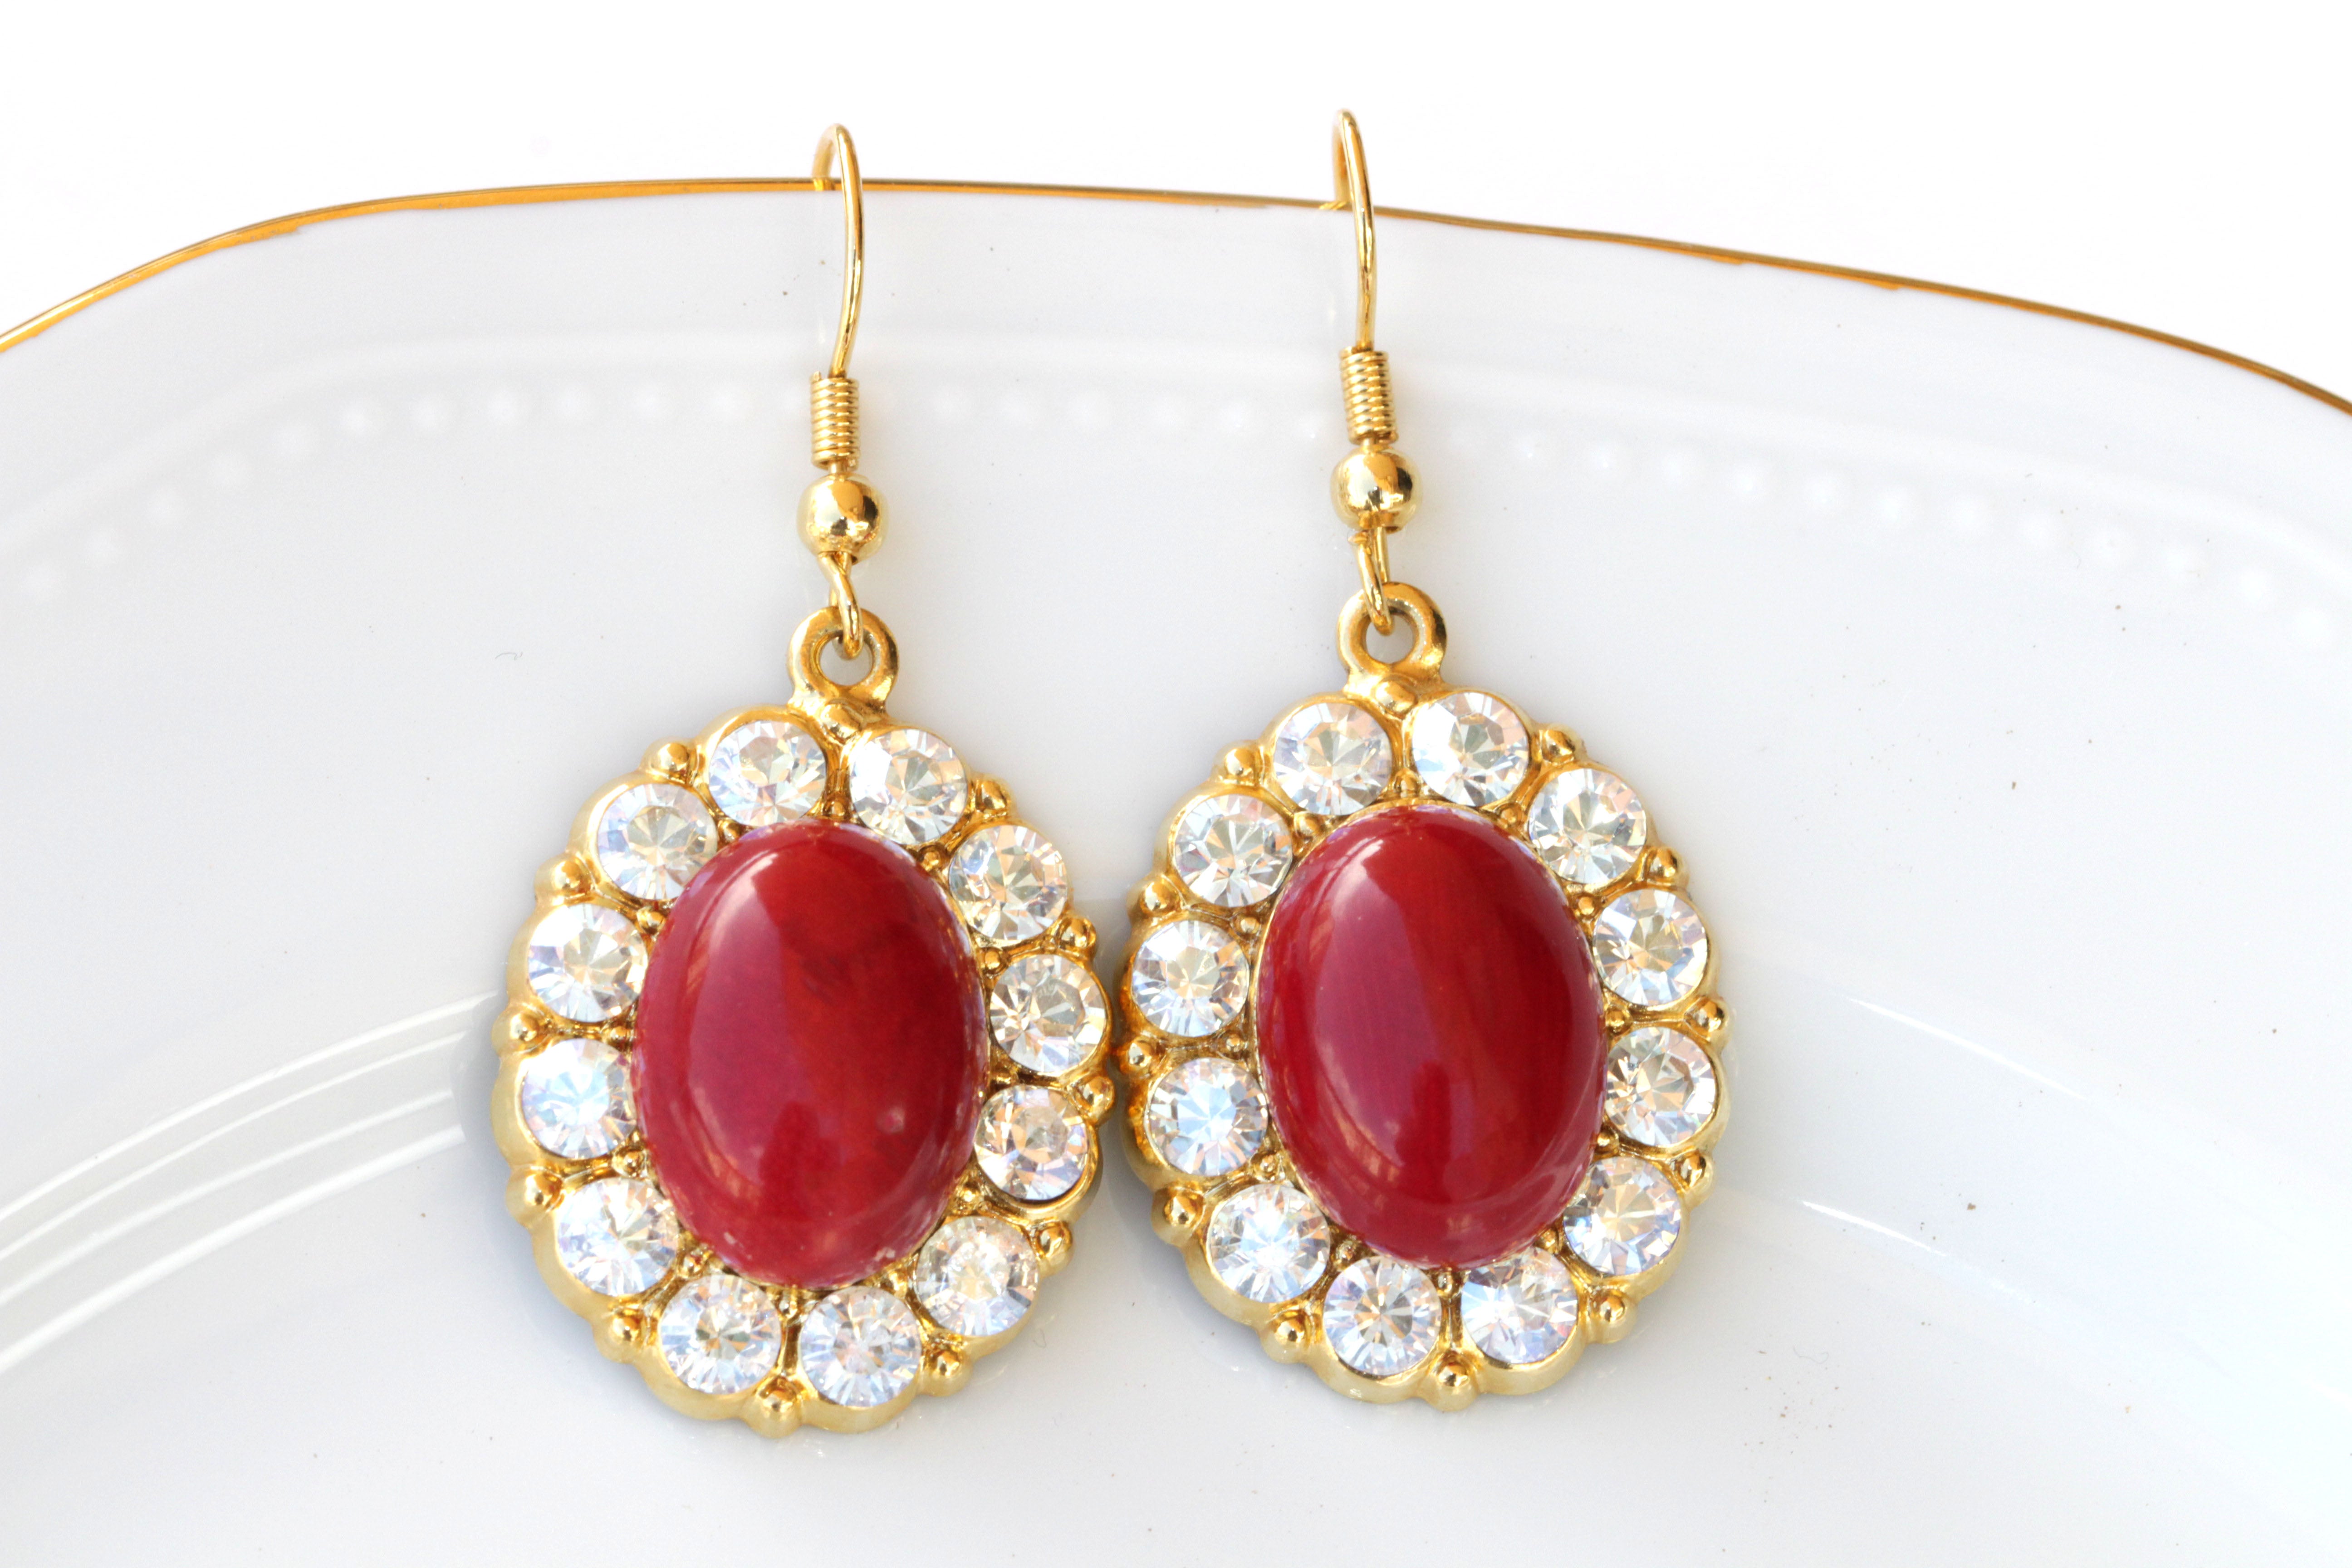 Red Coral Earrings Sun Sterling Silver 925 - SunnyArmenia